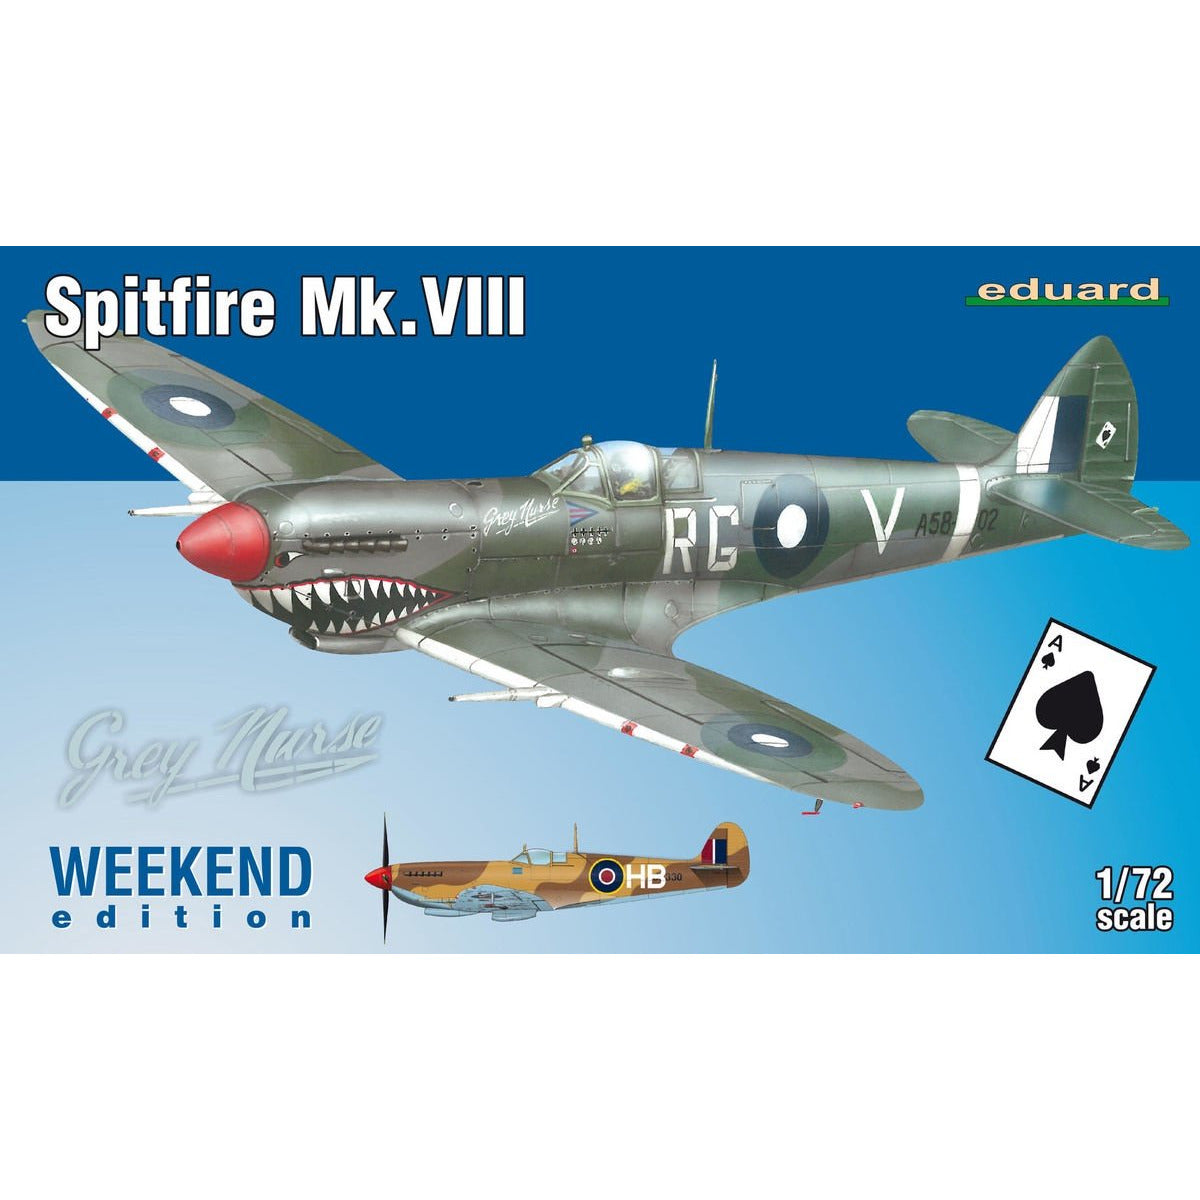 Spitfire HF Mk VIII (Weekend Edition) 1/72 by Eduard